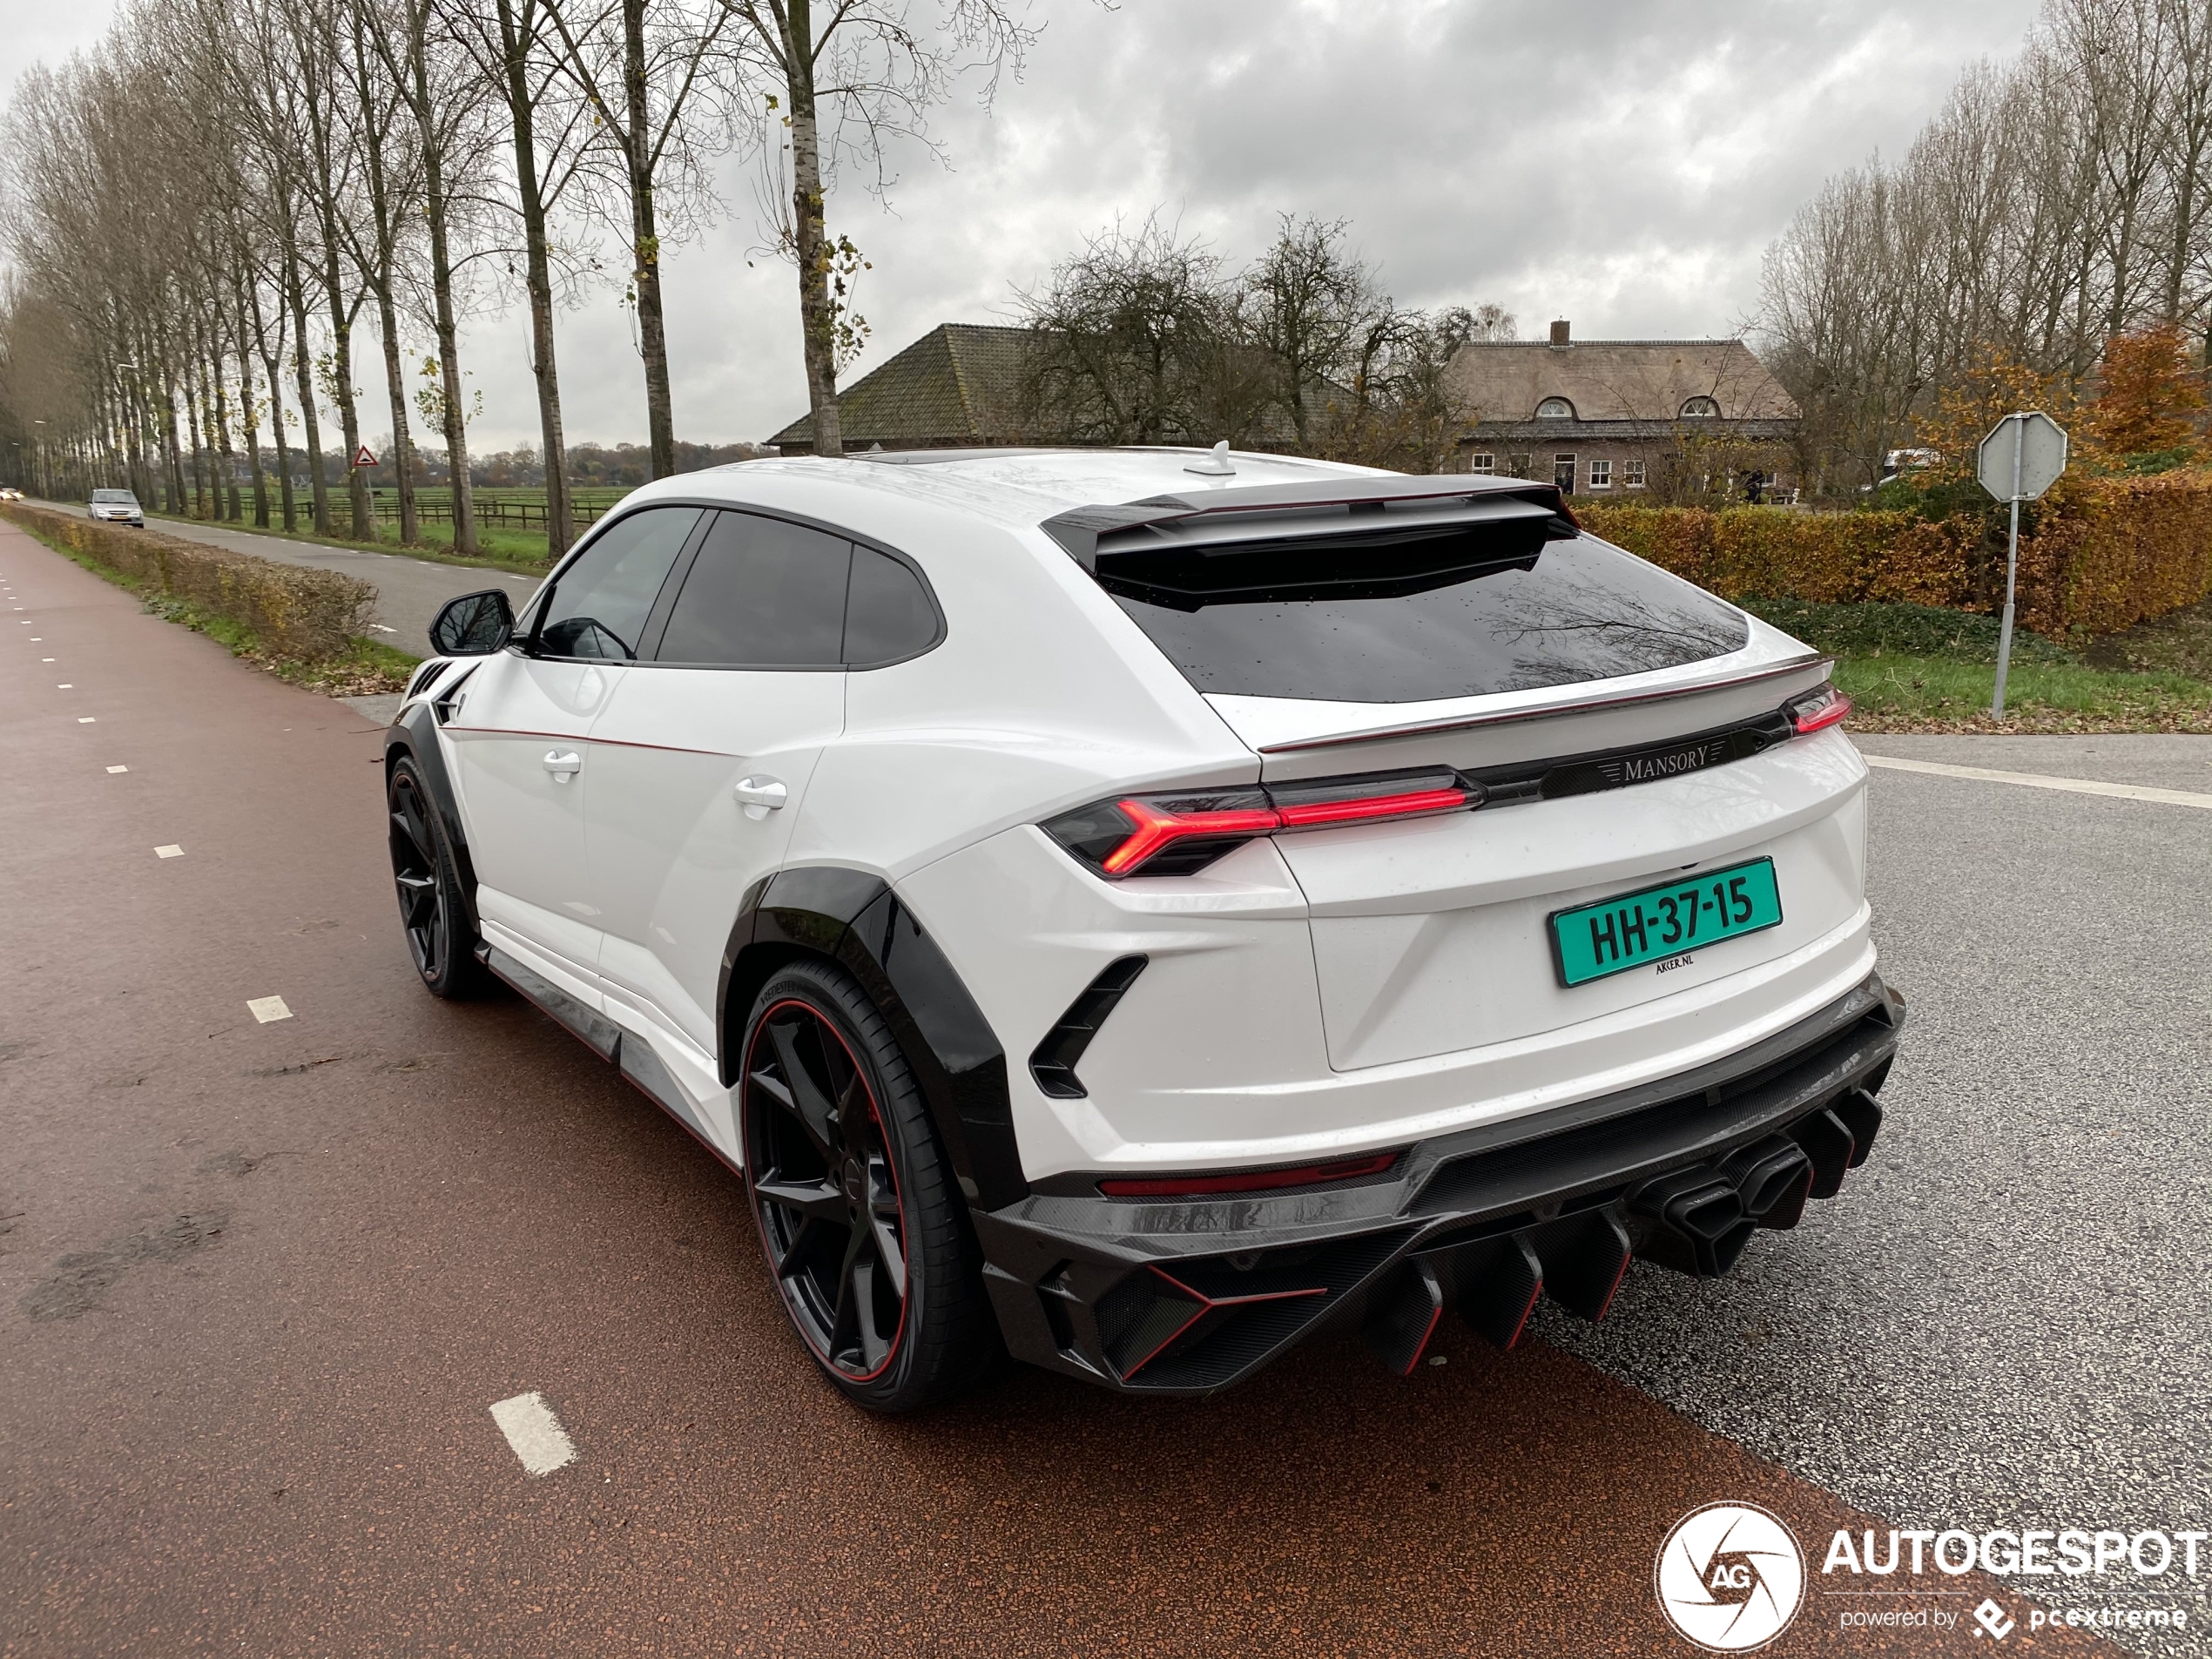 Nederland krijgt er een bizarre Lamborghini Urus bij